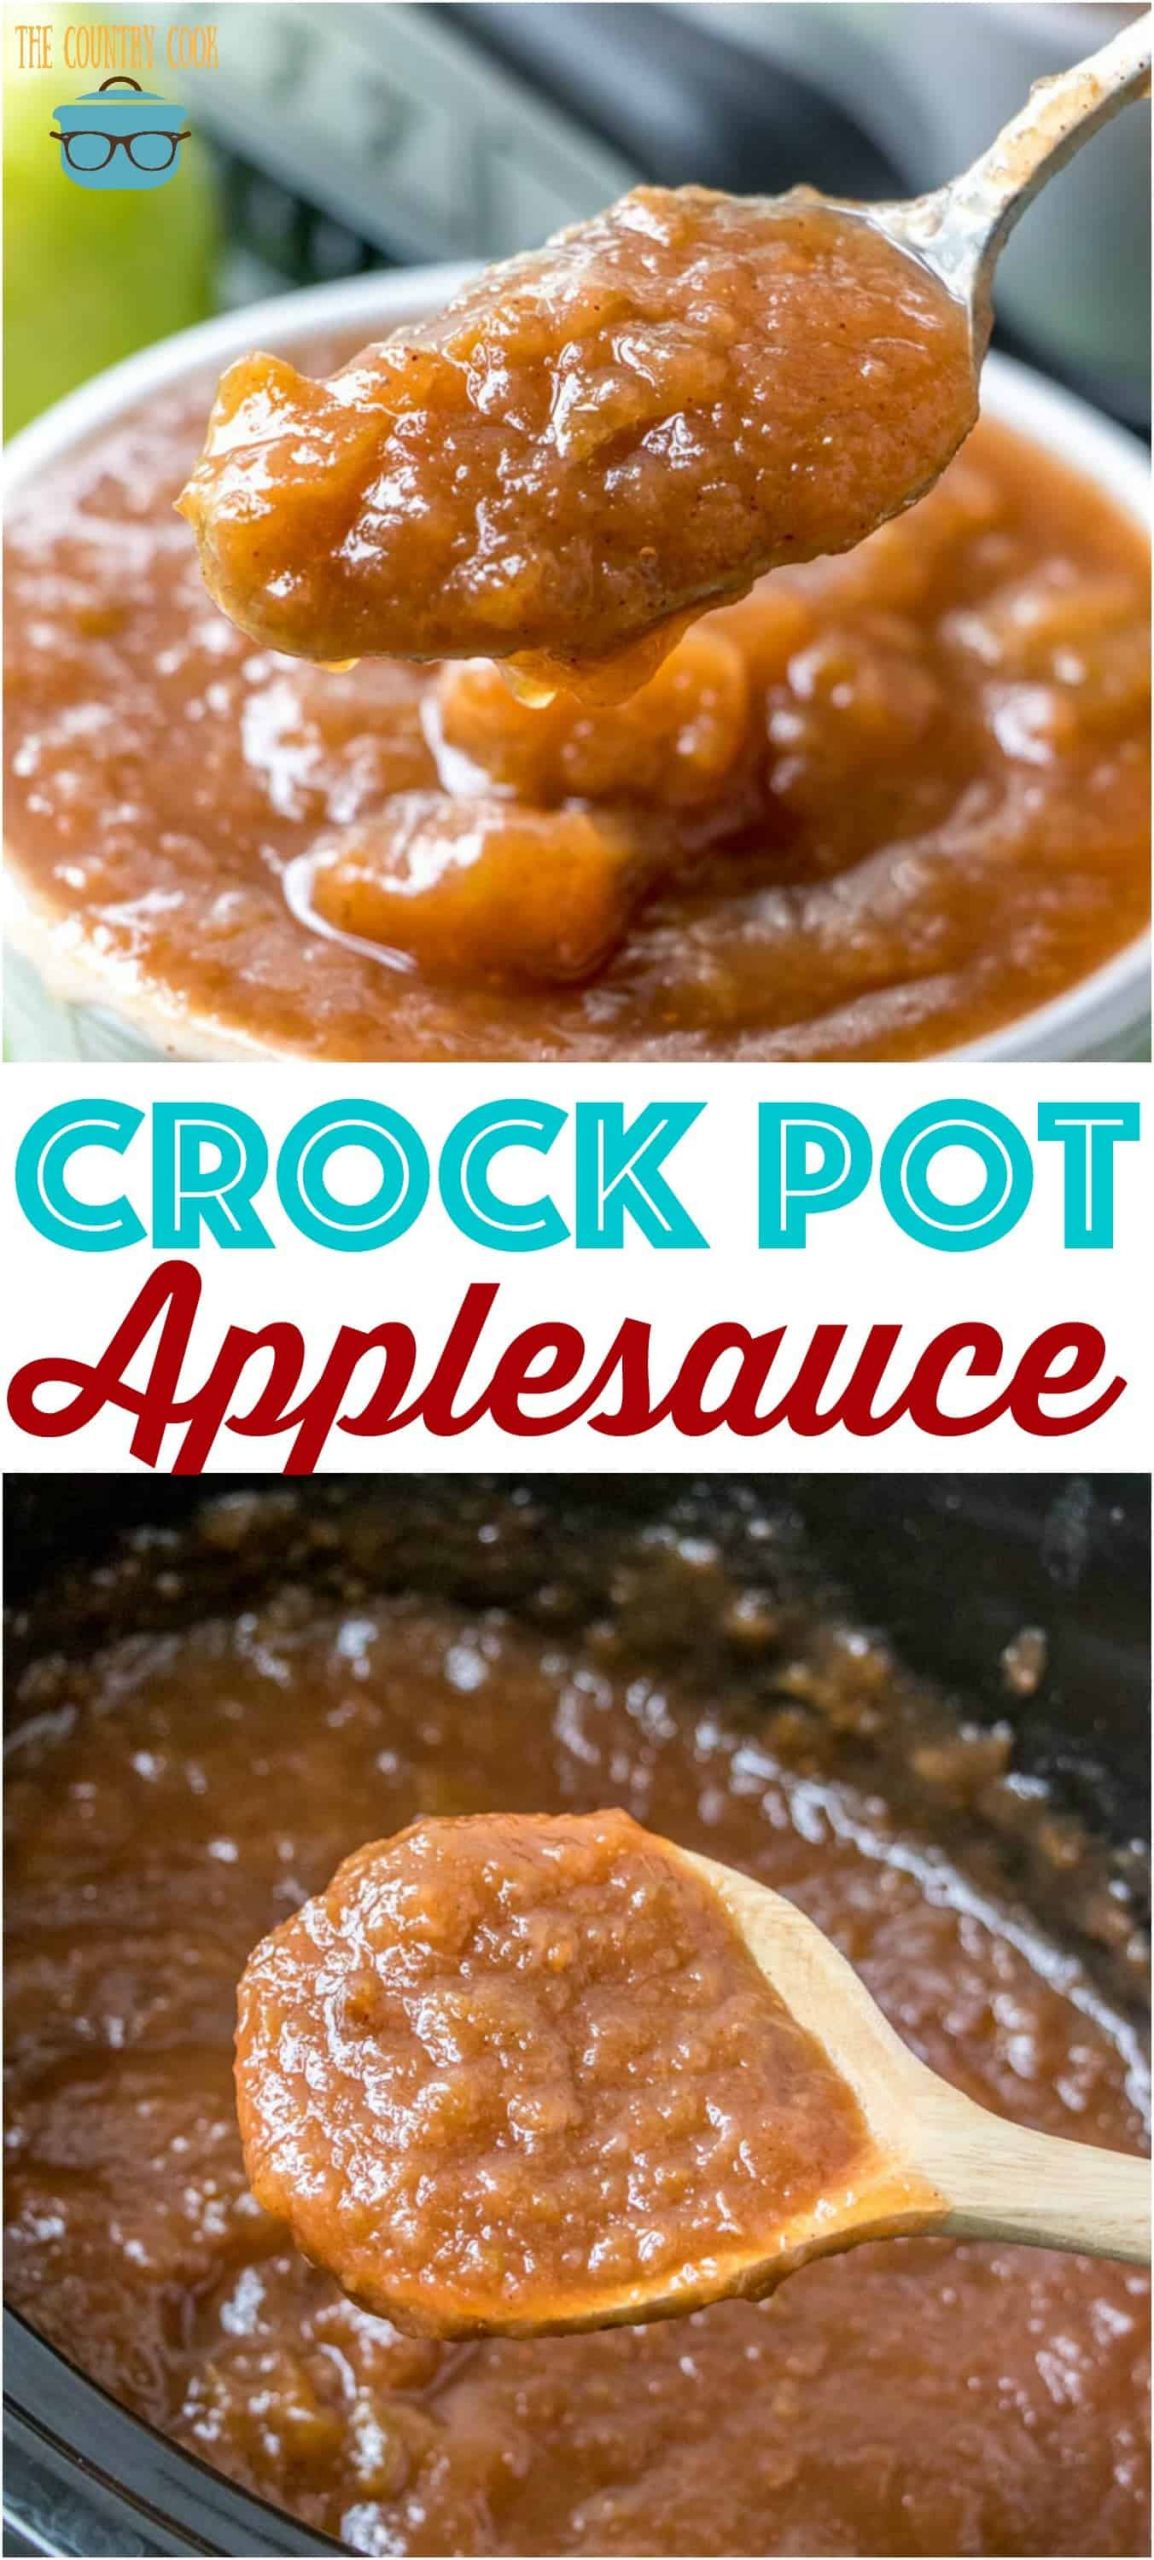 Applesauce Recipes Crockpot
 Crock Pot Applesauce